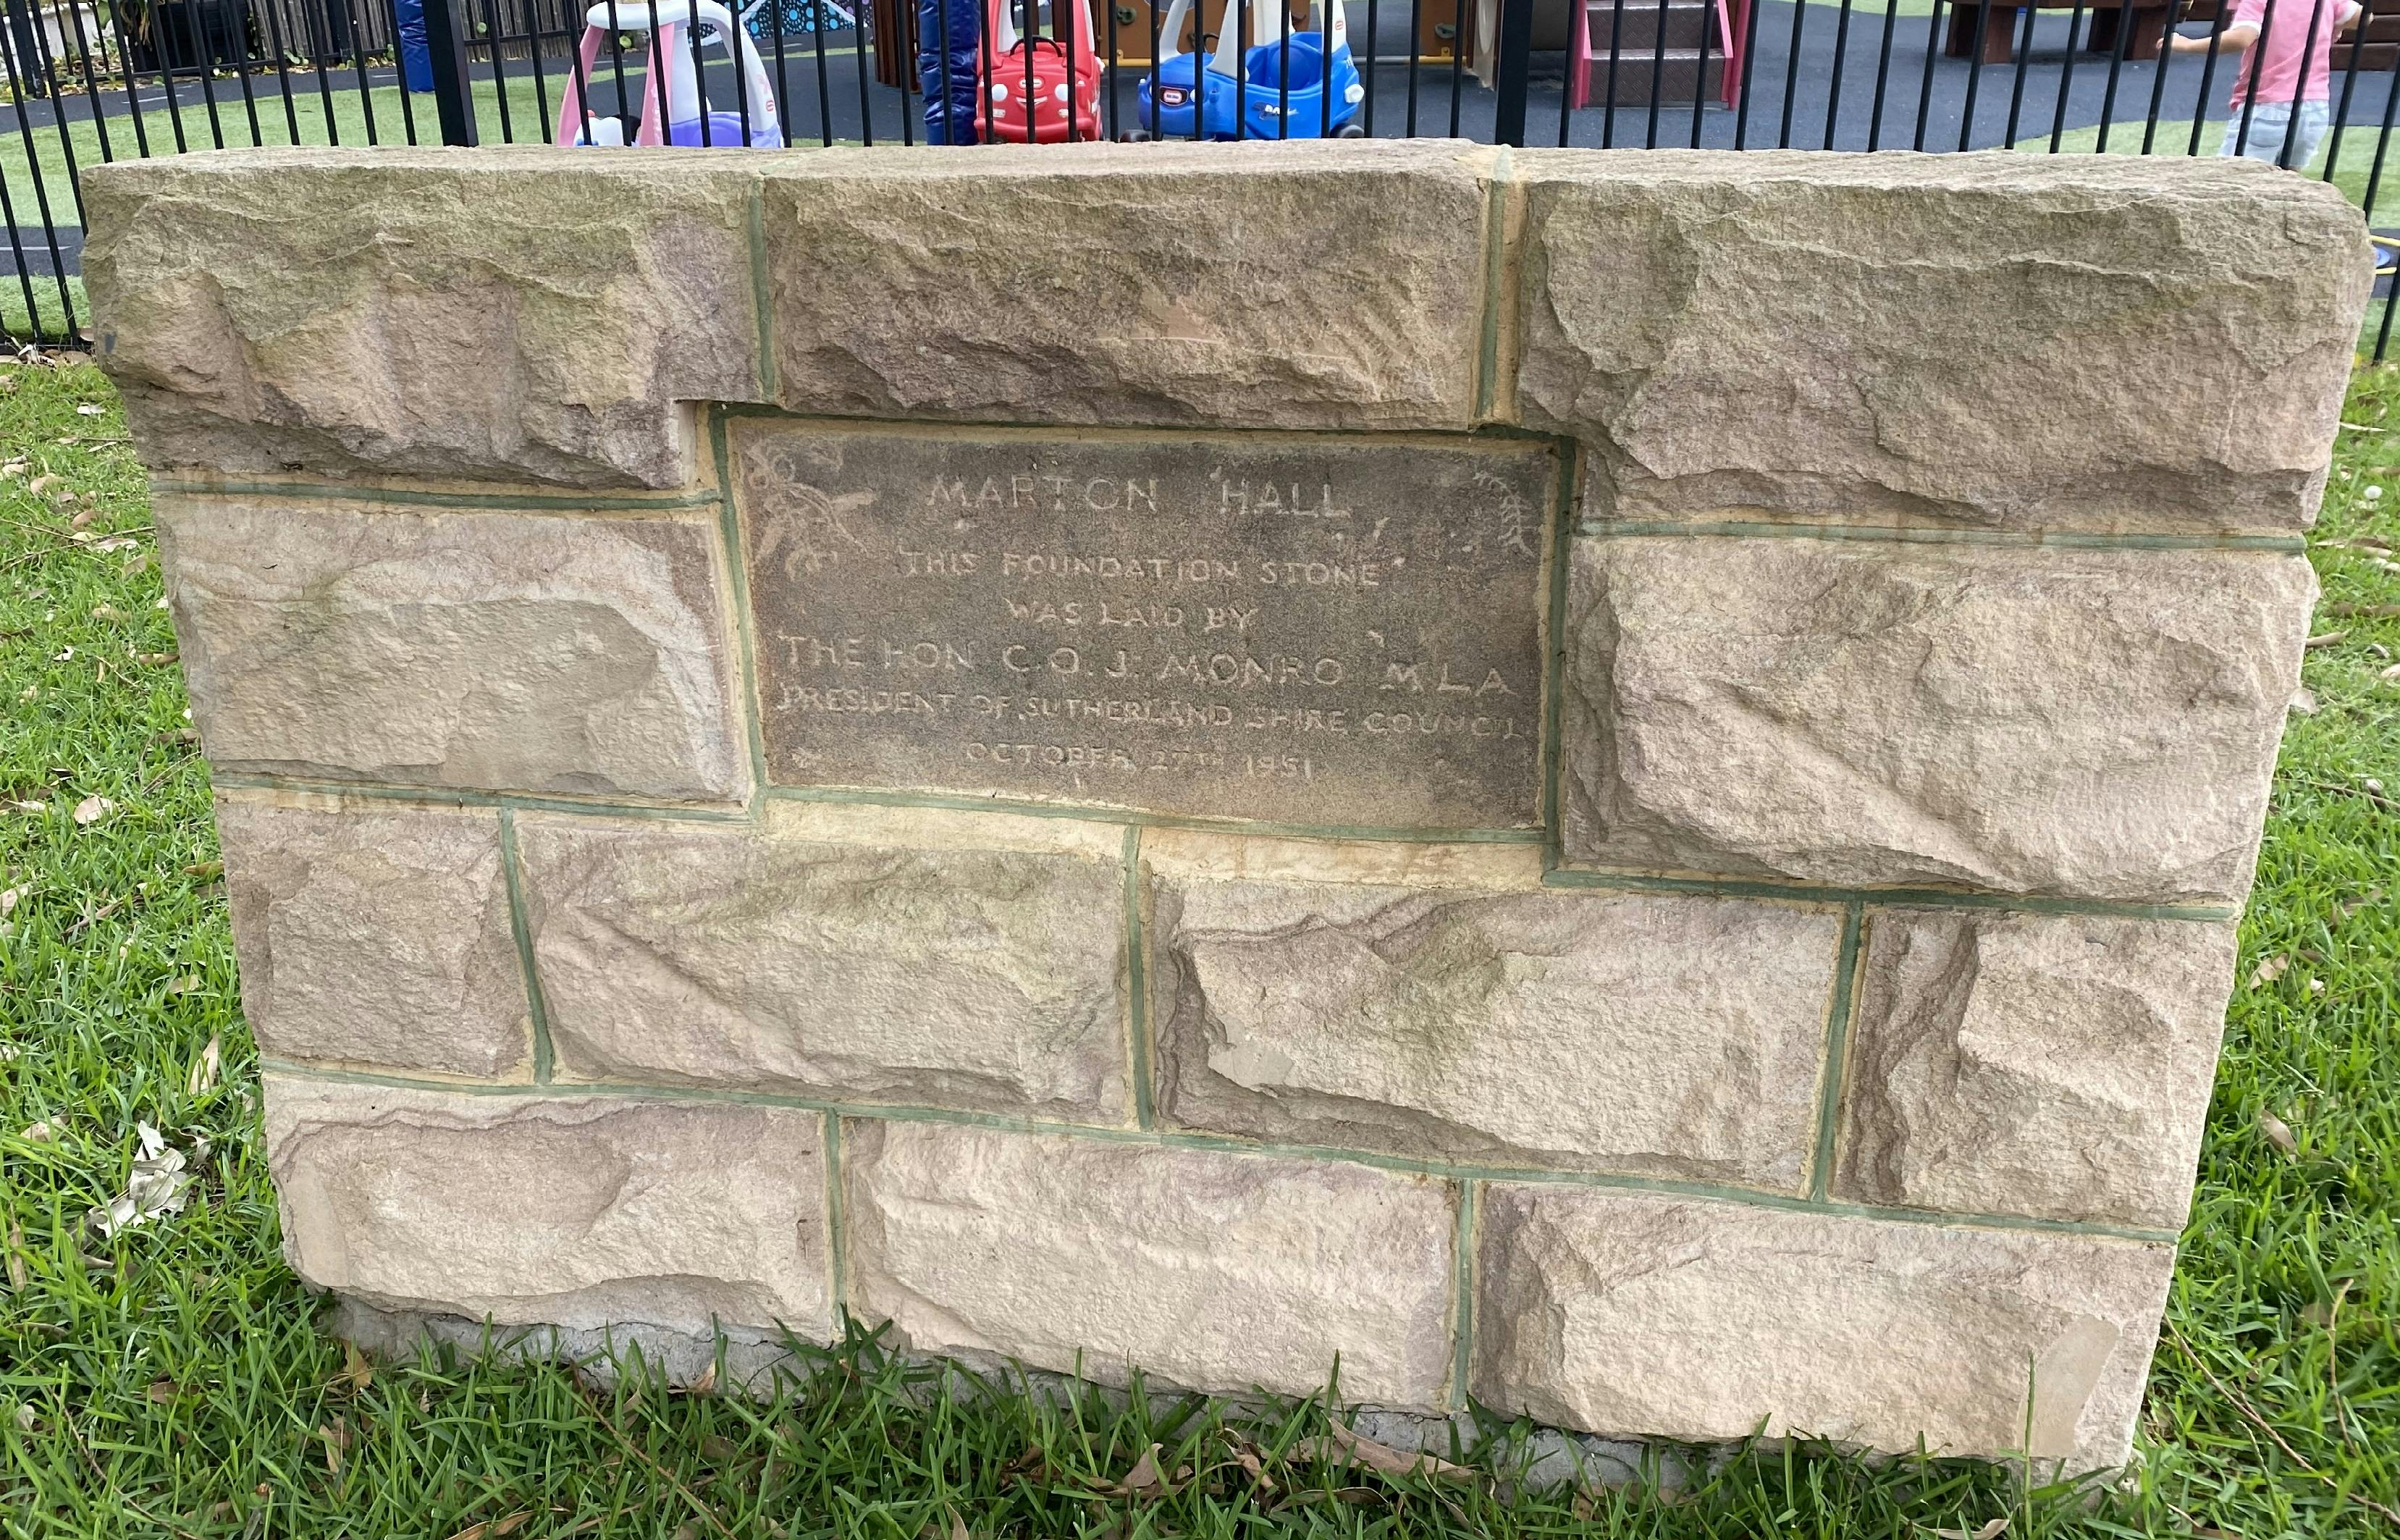 Foundation stone at Marton Park - 27 October 1951